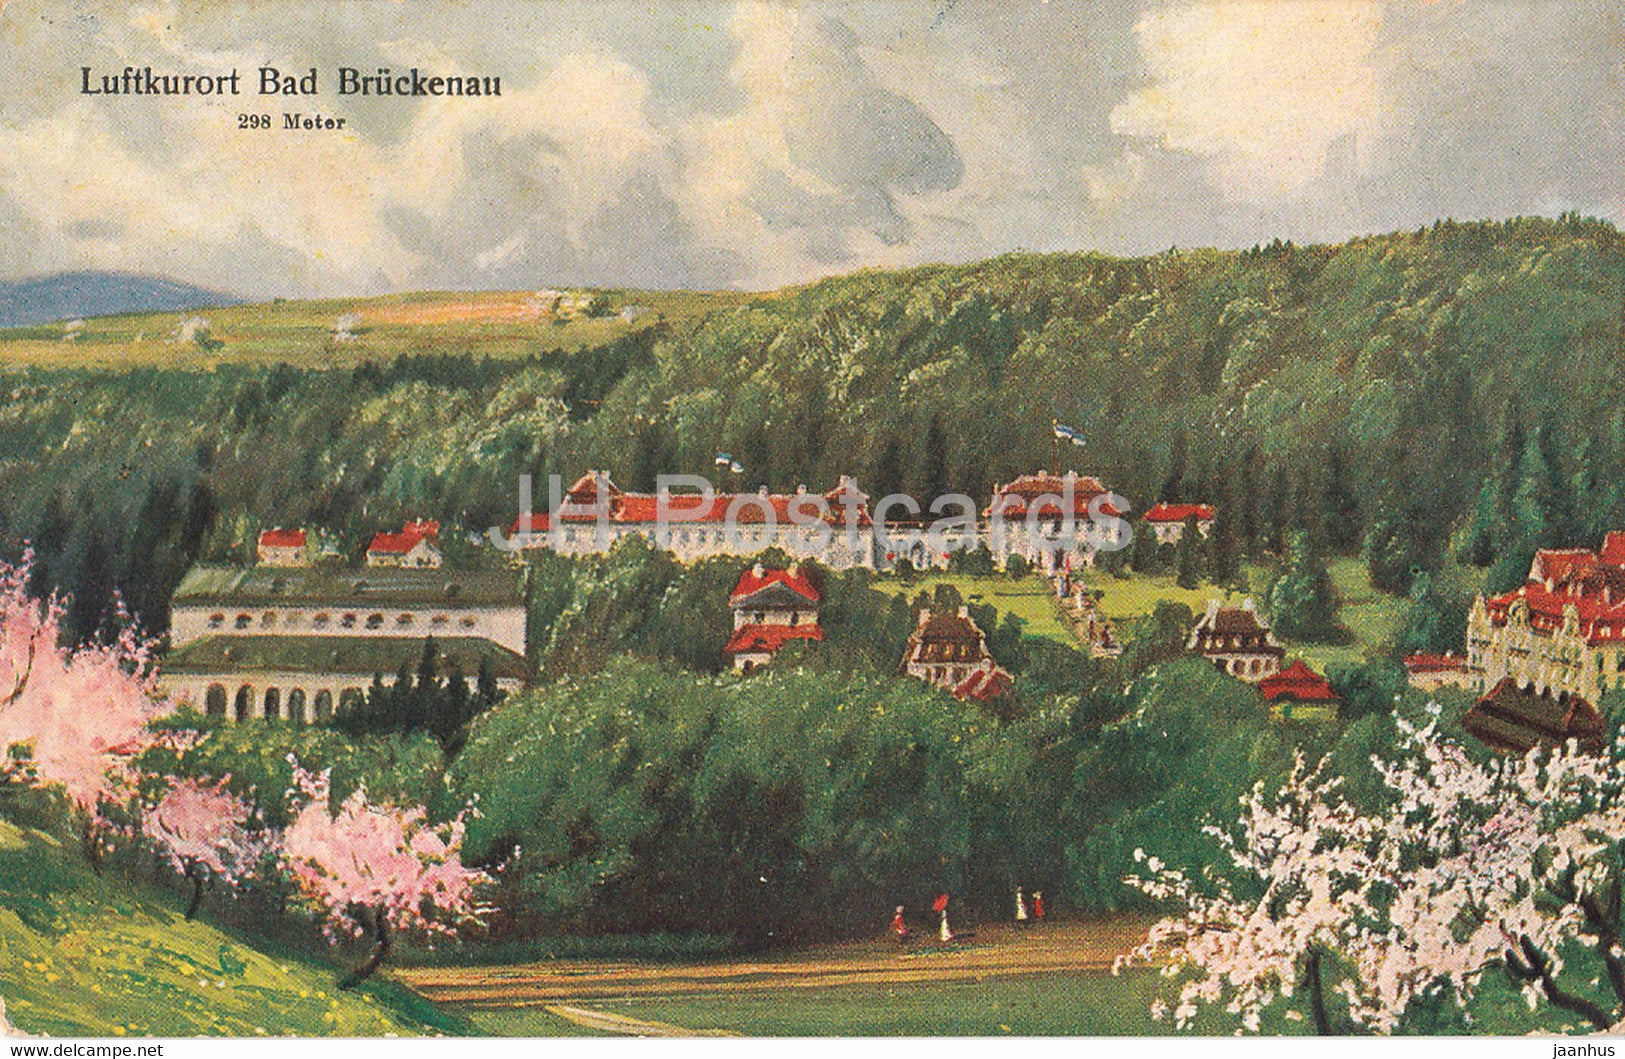 Luftkurort Bad Bruckenau 298 Meter - old postcard - 1907 - Germany - used - JH Postcards